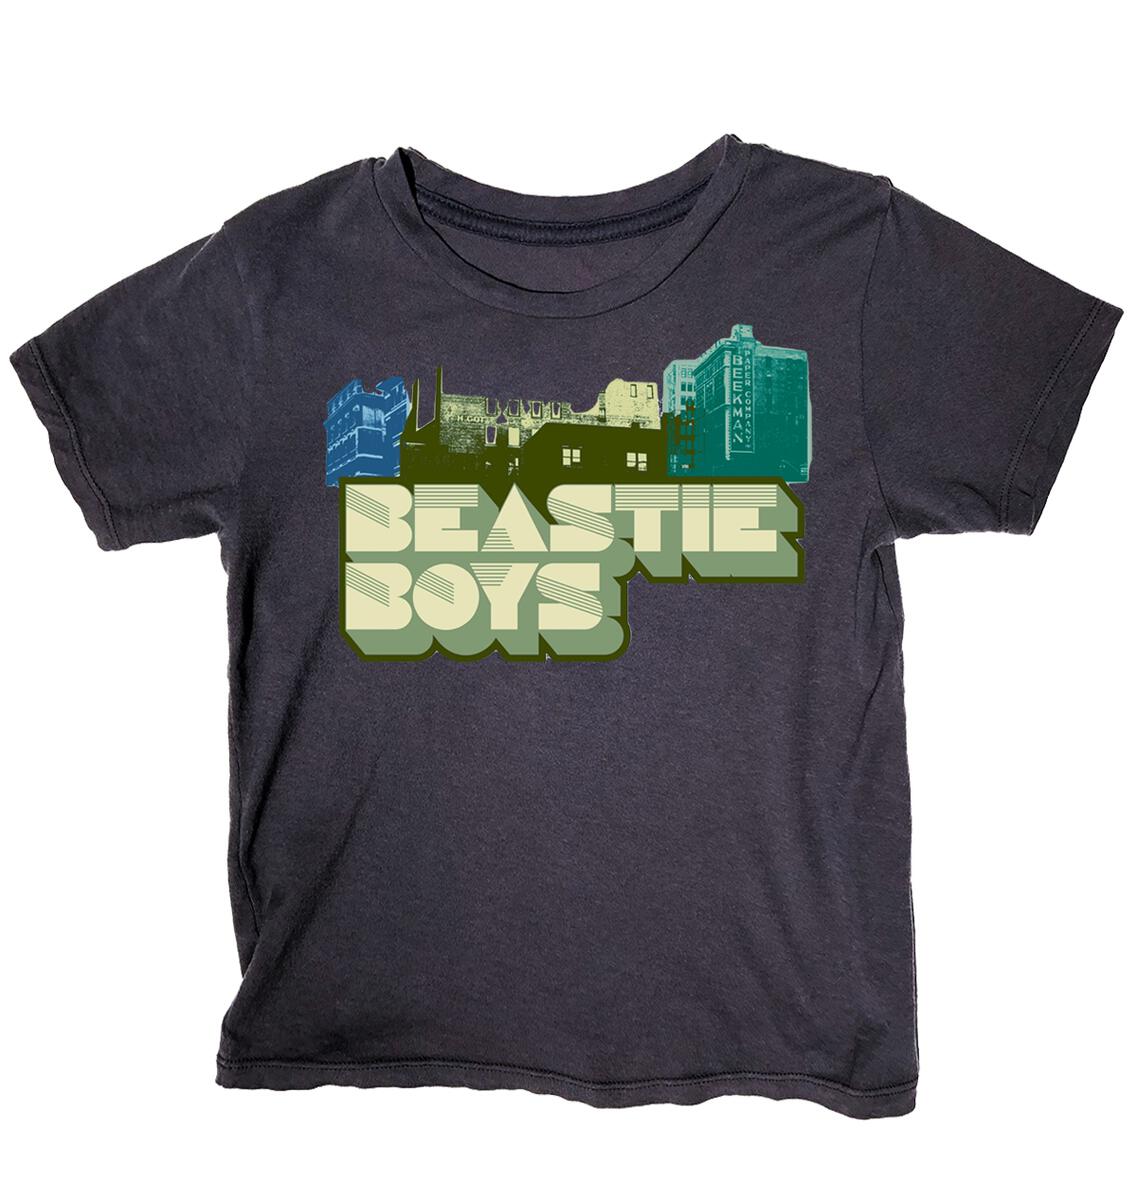 Beastie Boys Short Sleeve Simple Tee - Twinkle Twinkle Little One